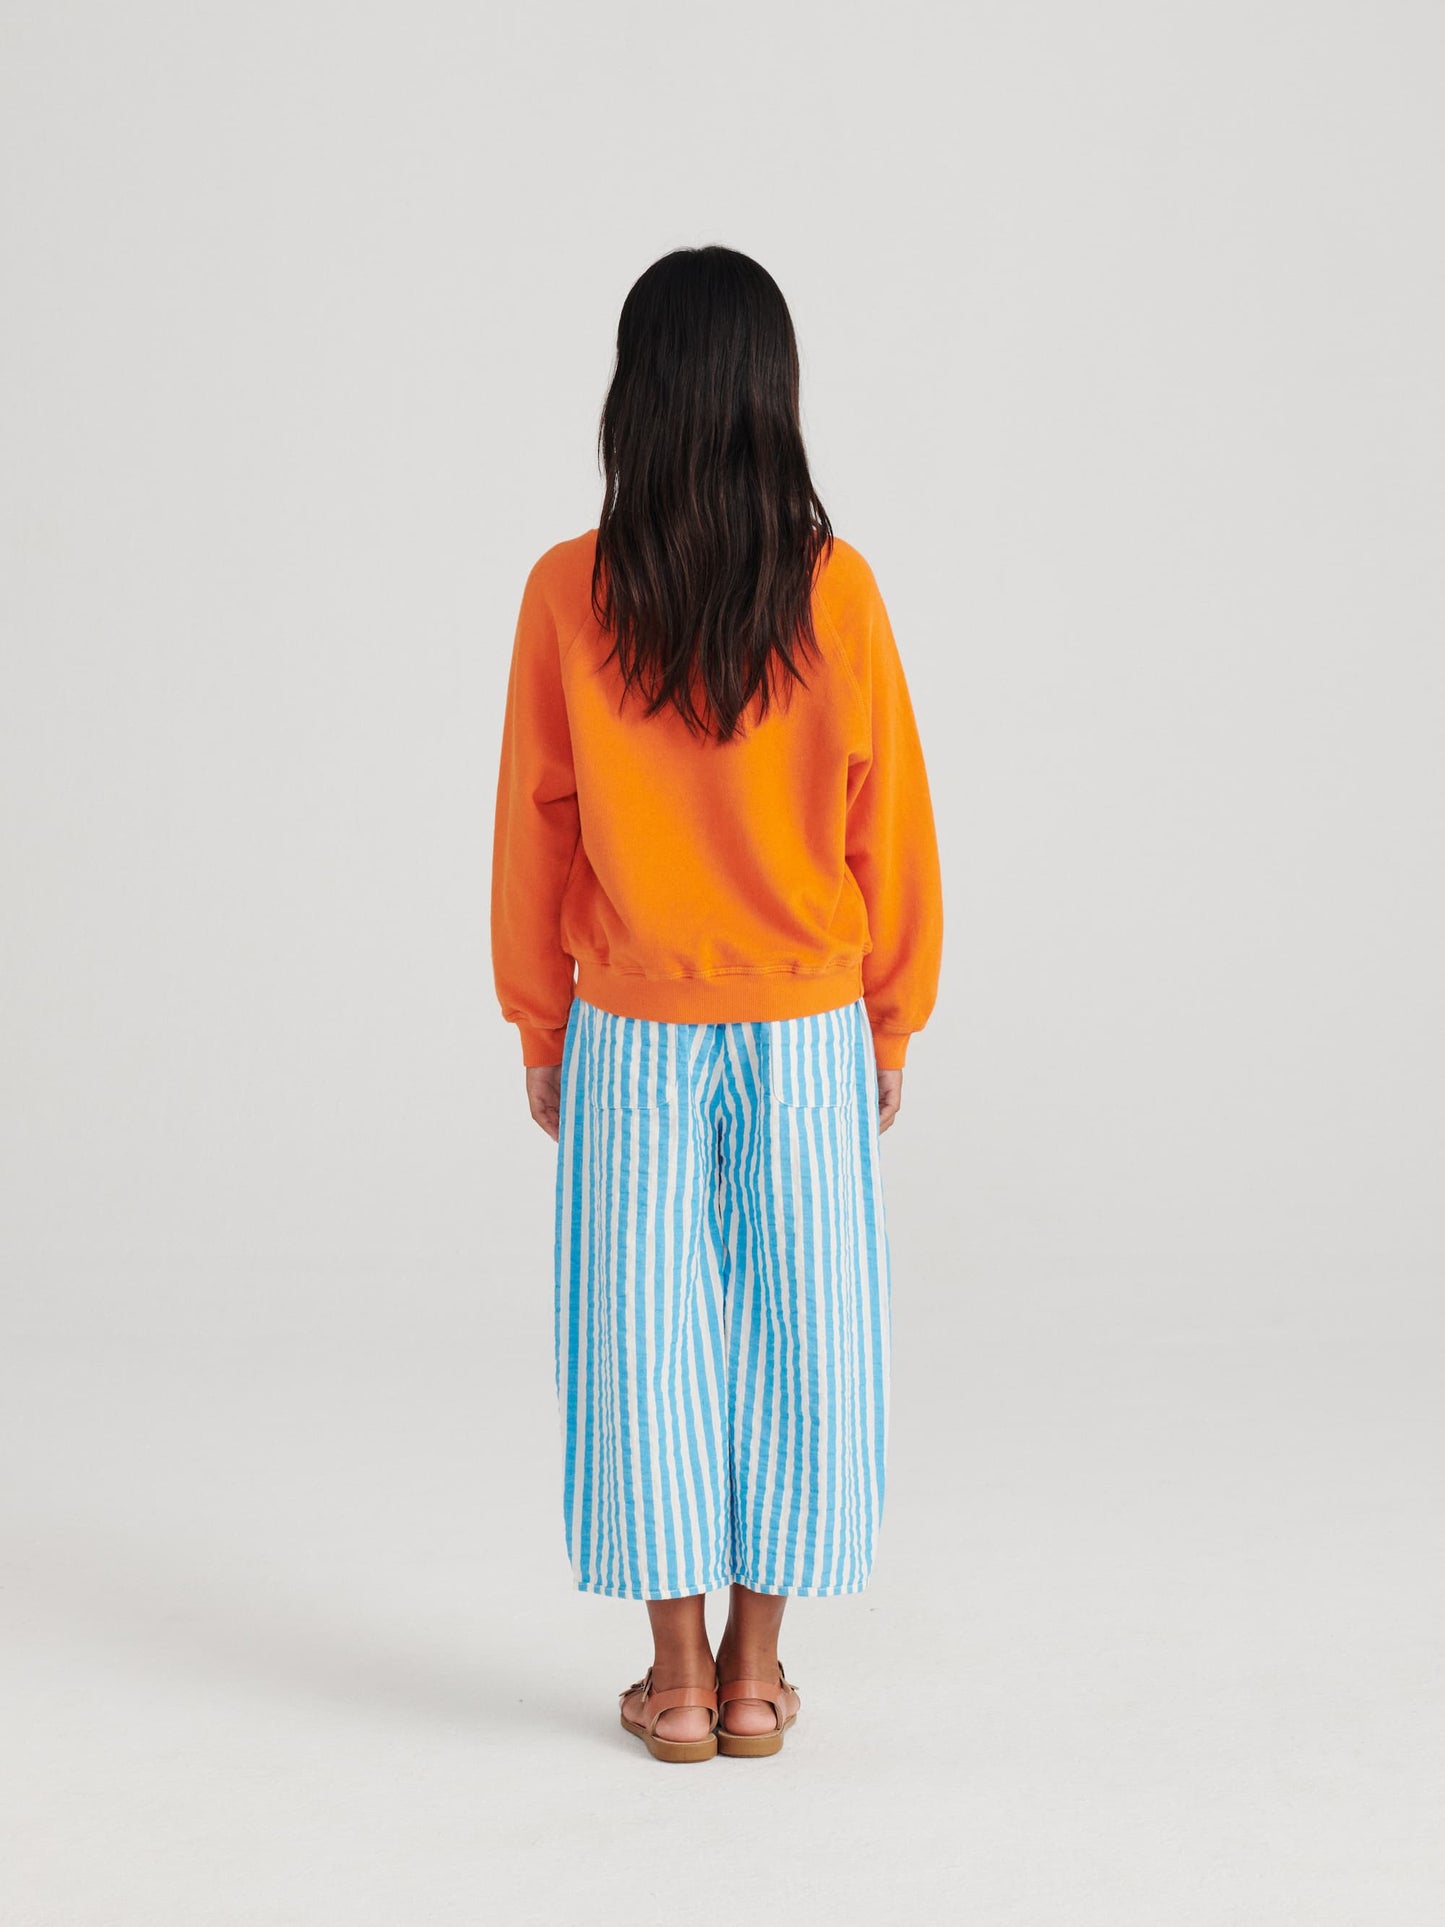 Sweatshirt nº01 Celosia Orange